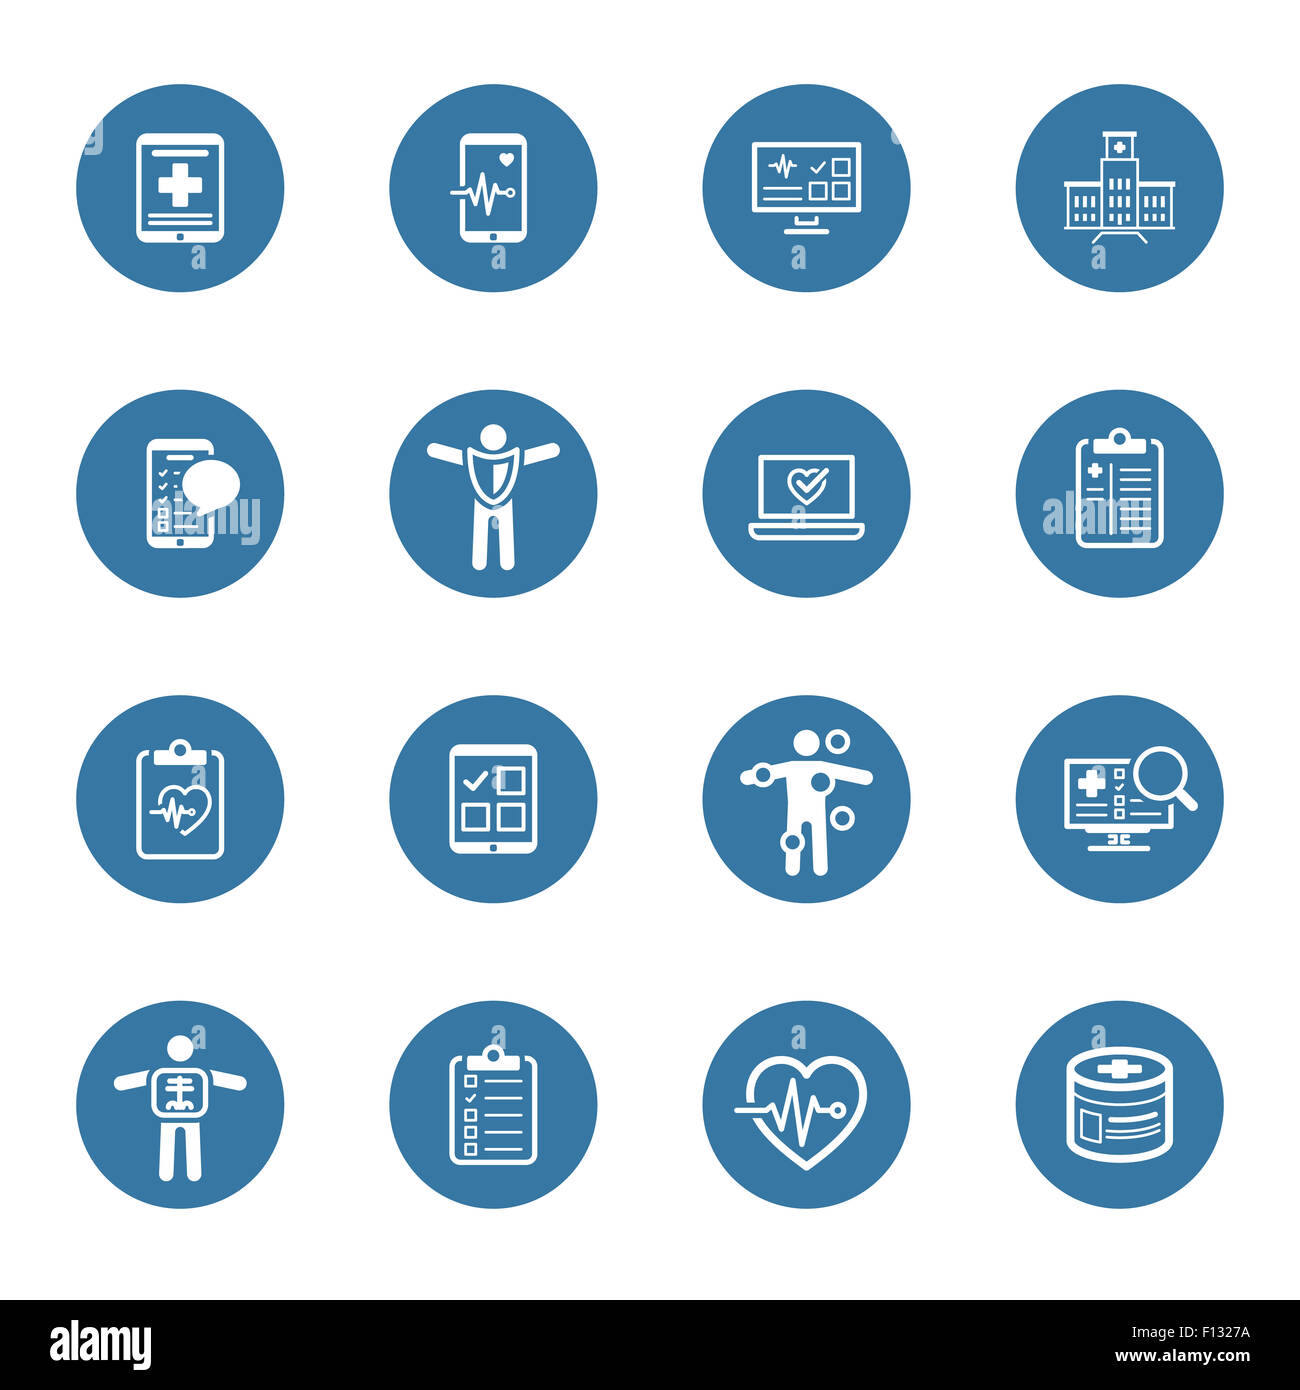 Medical & Health Care Icons Set. Flat Design. Isolated Illustration. Stock Photo